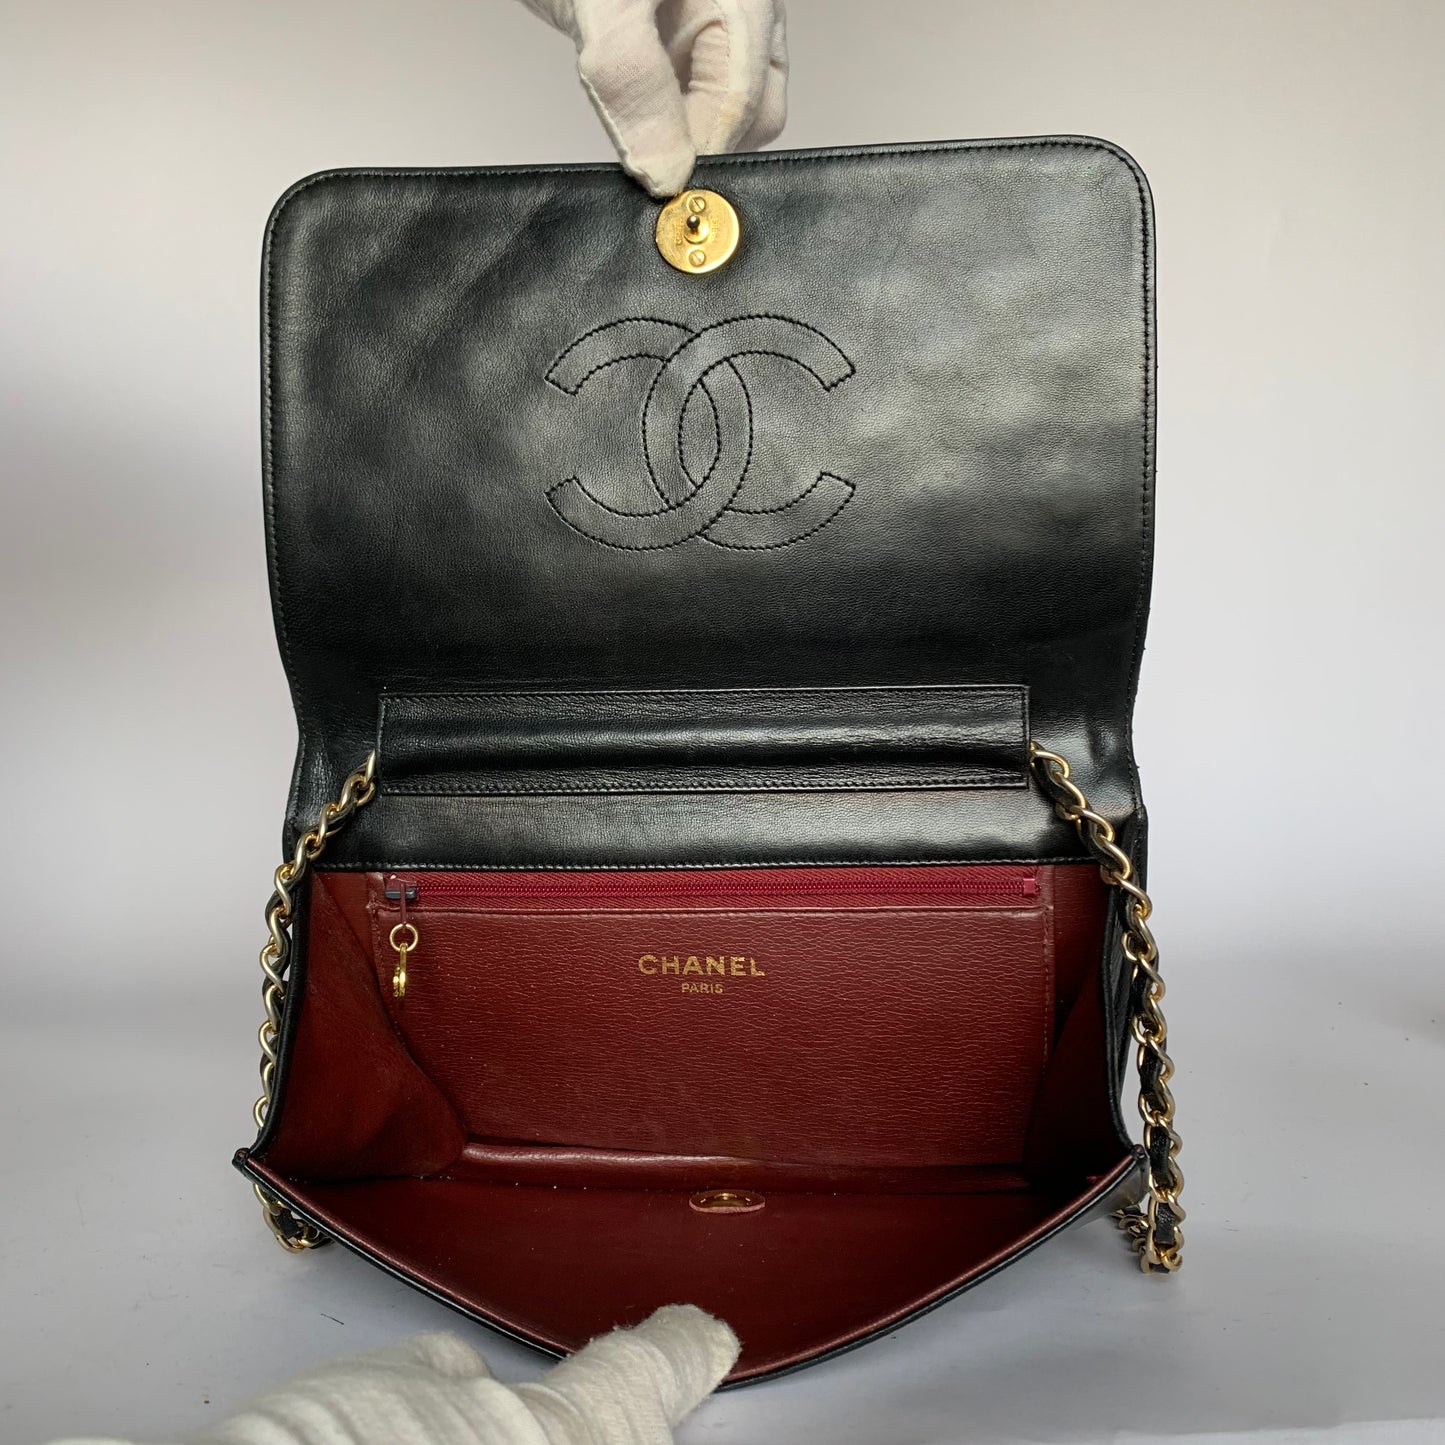 Chanel Chanel Jedna Flap Bag Skóra jagnięca - Torba na ramię - Etoile Luxury Vintage